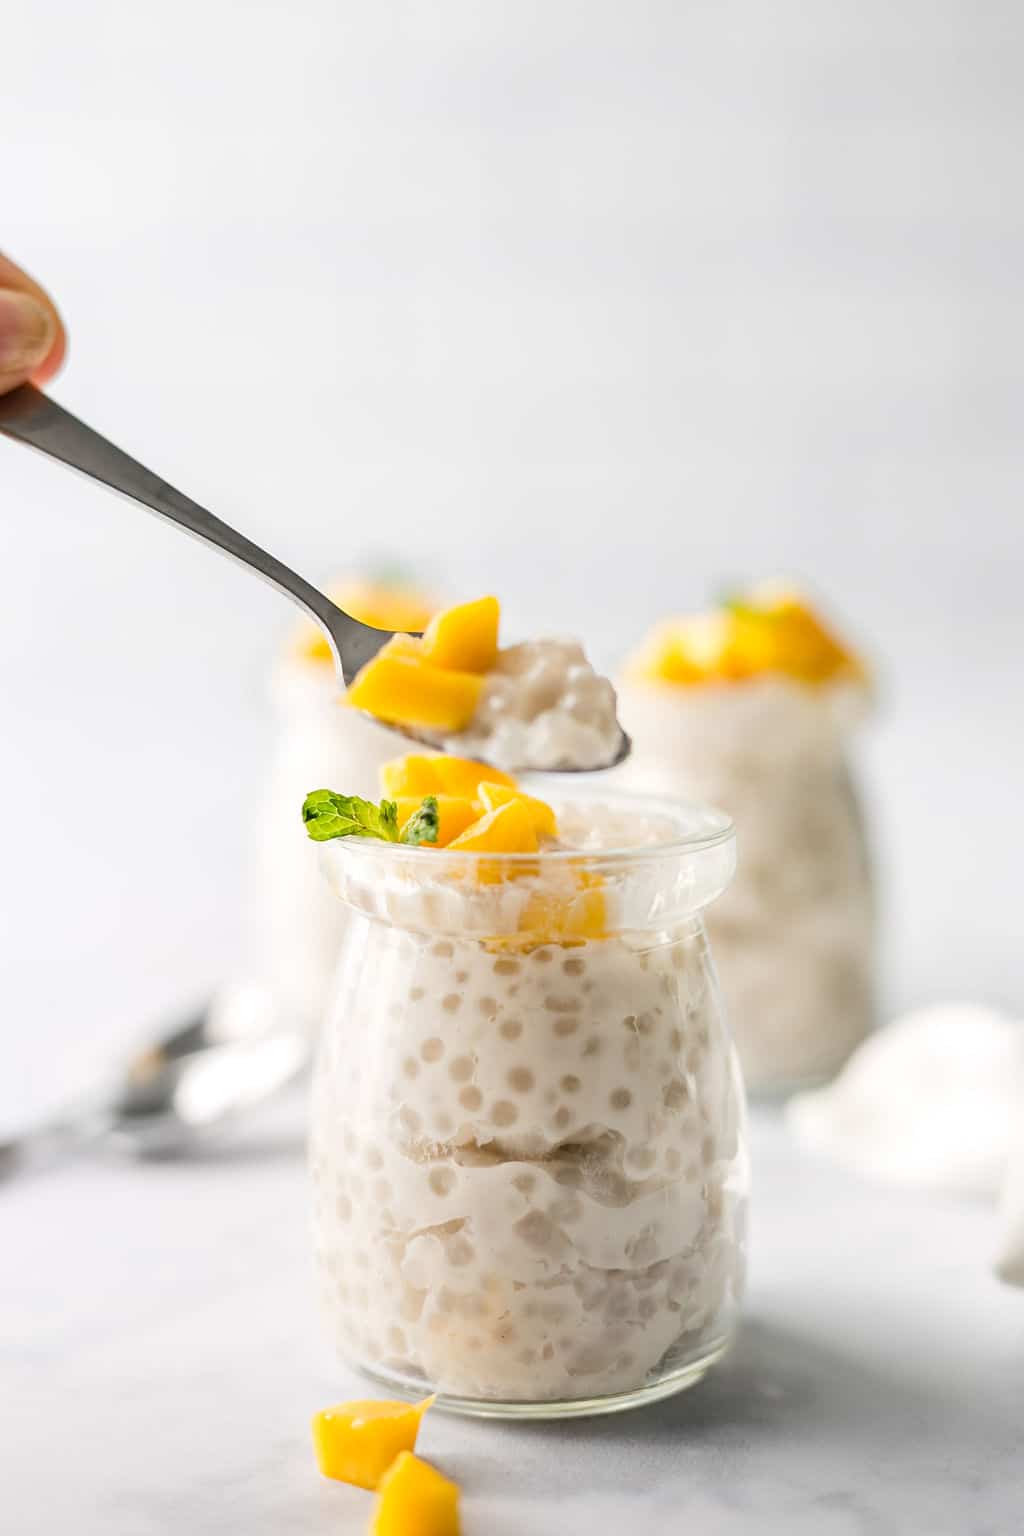 Vegan Tapioca Pudding topped with Mango in glass jar.